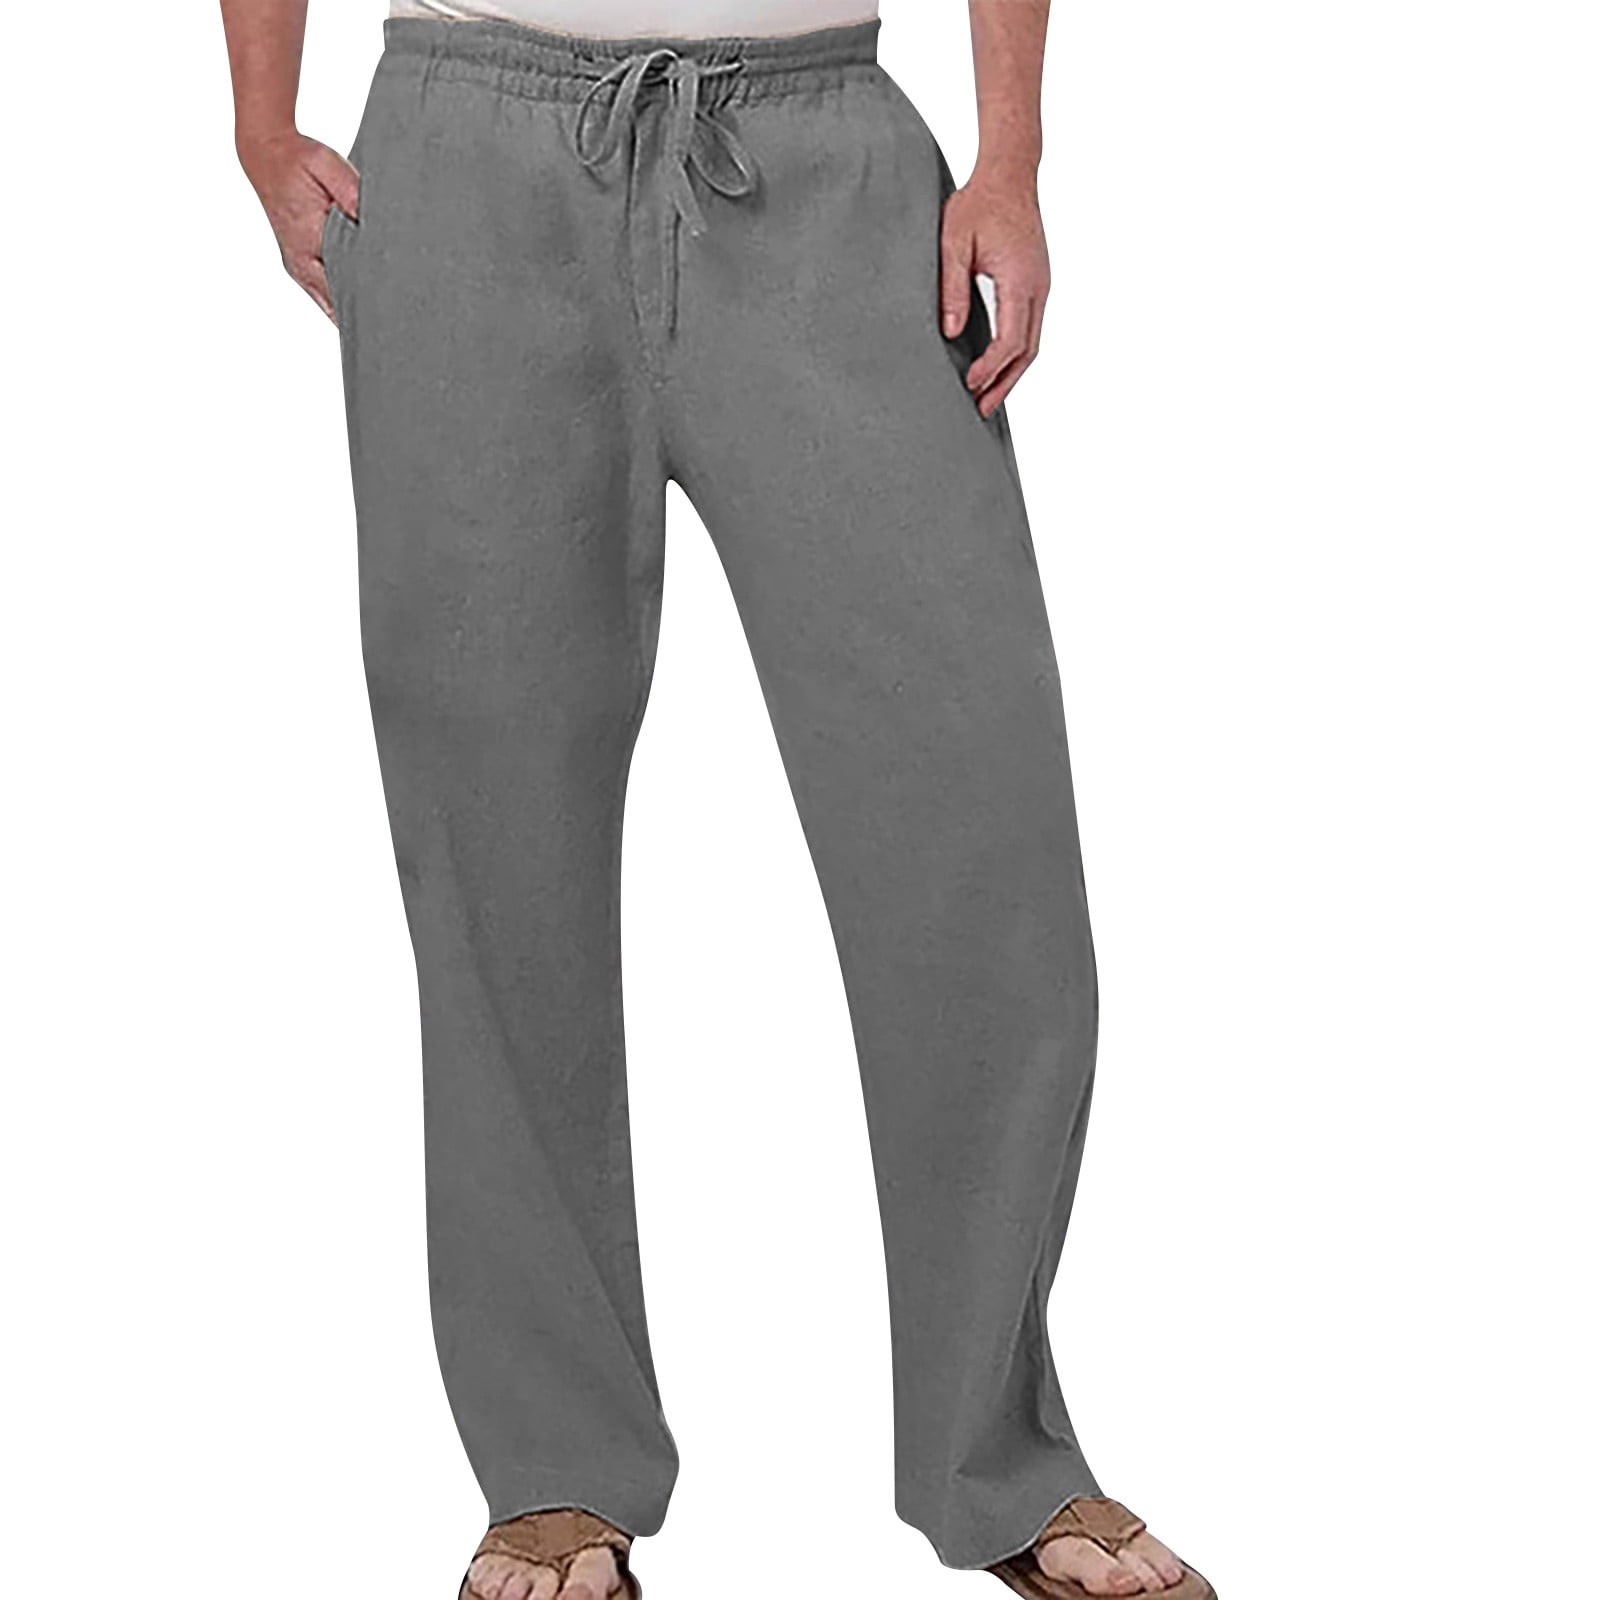 Sopiago Pants for Men Sweatpants Mens Cotton Yoga Running Lightweight ...